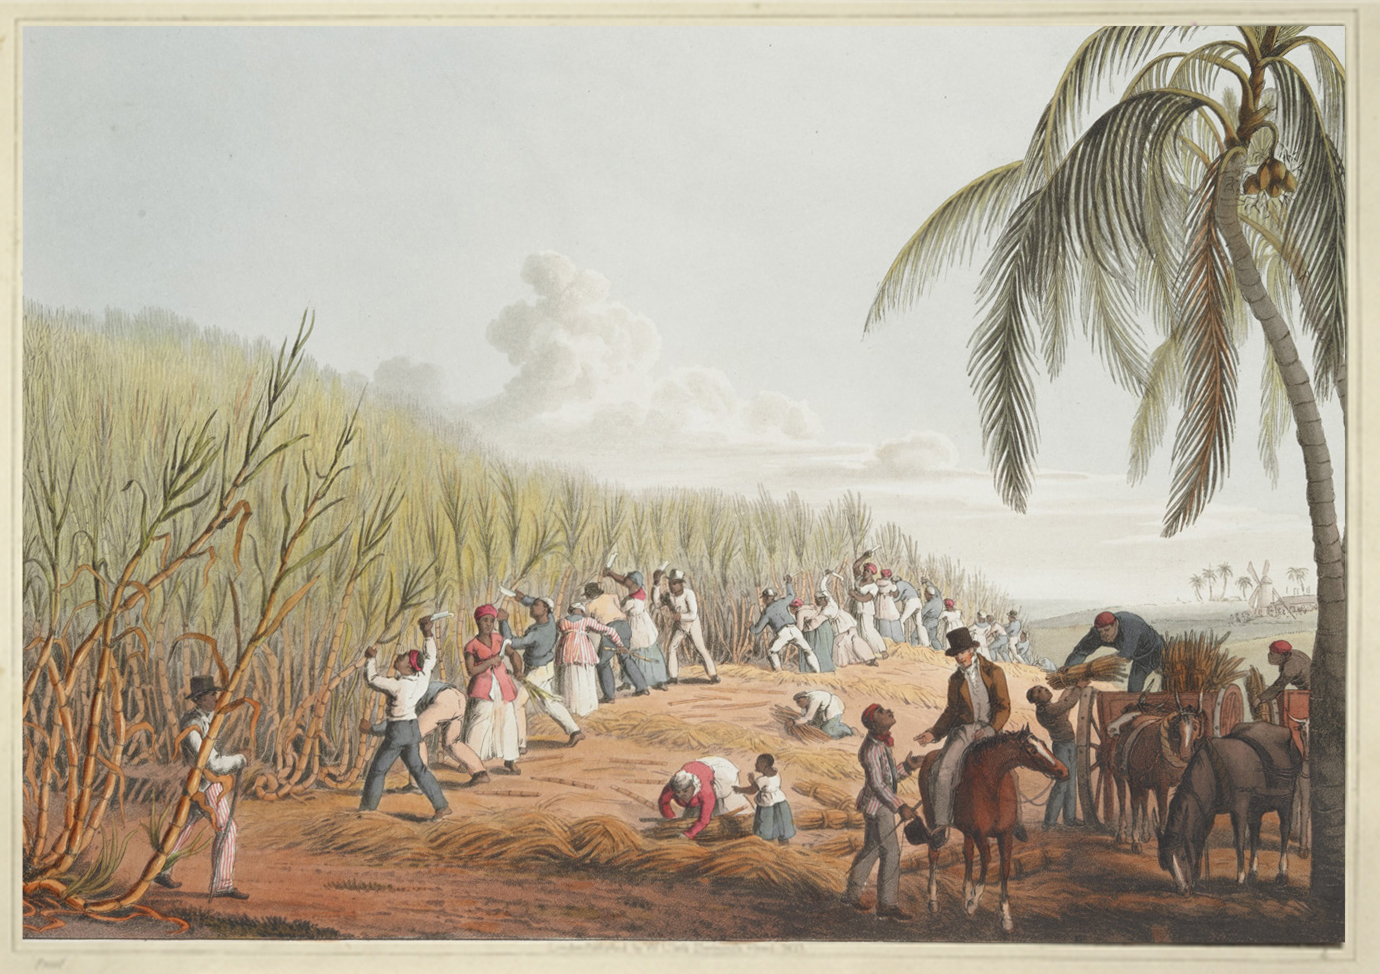 print of enslaved people cutting sugarcane with overseer looking on